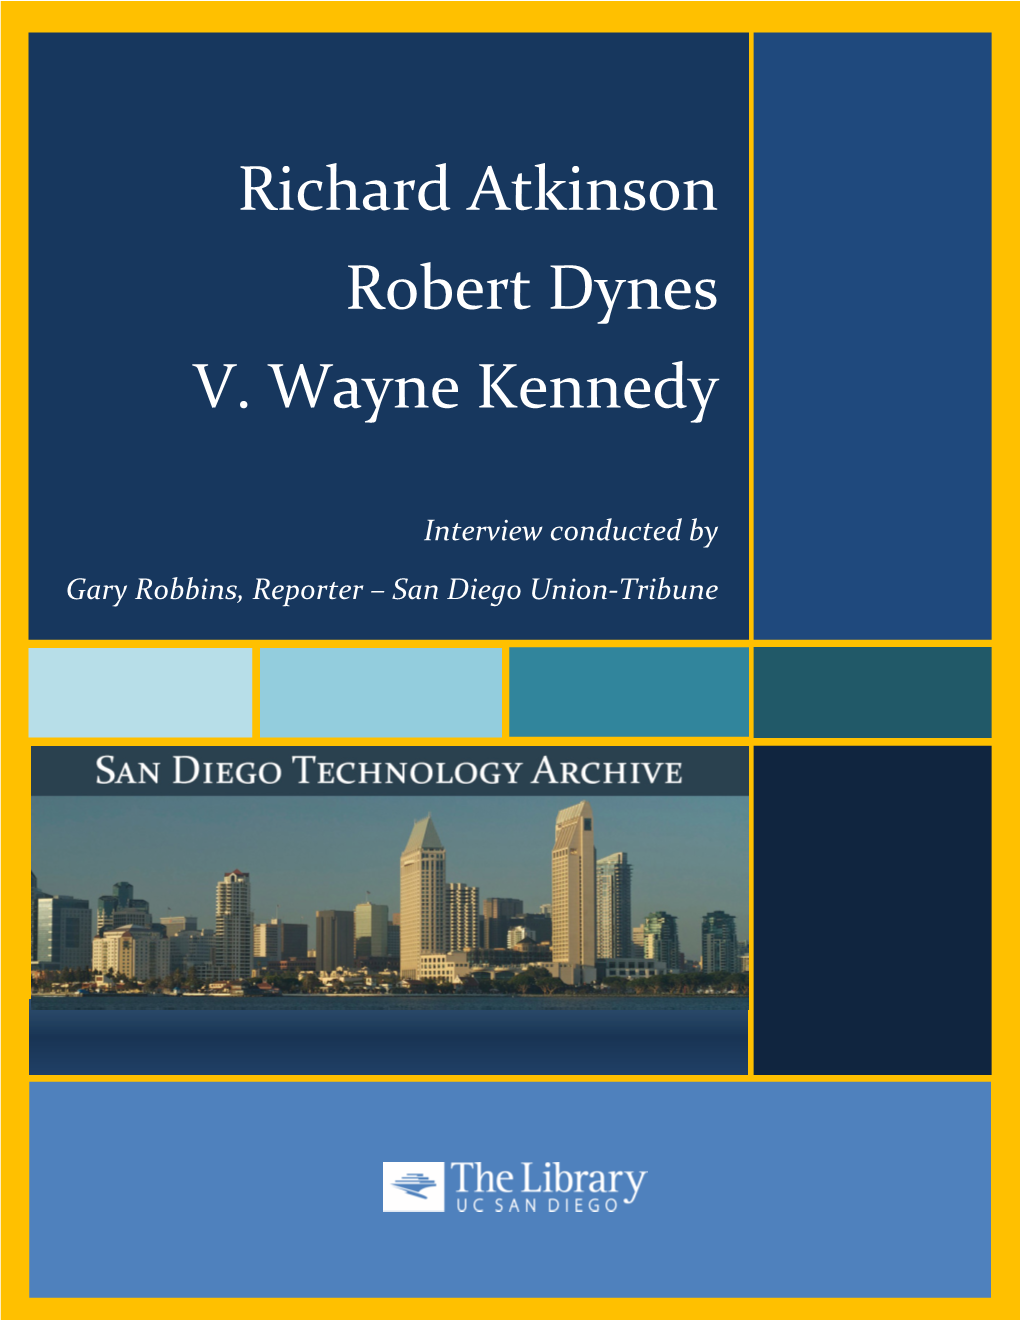 Richard Atkinson, Robert Dynes, V. Wayne Kennedy